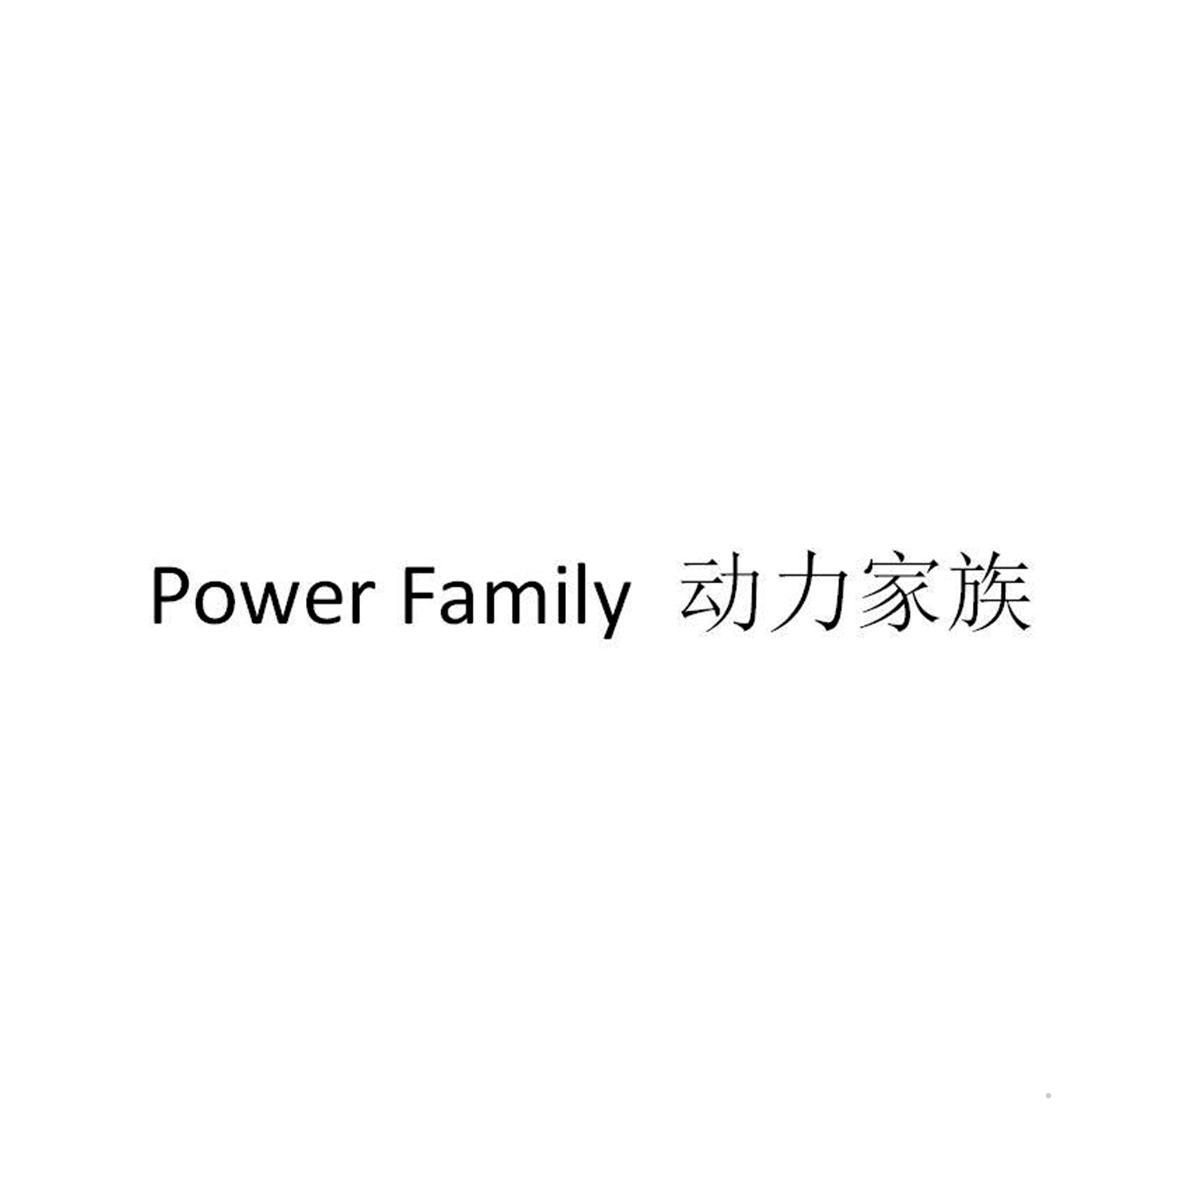 POWER FAMILY 动力家族logo